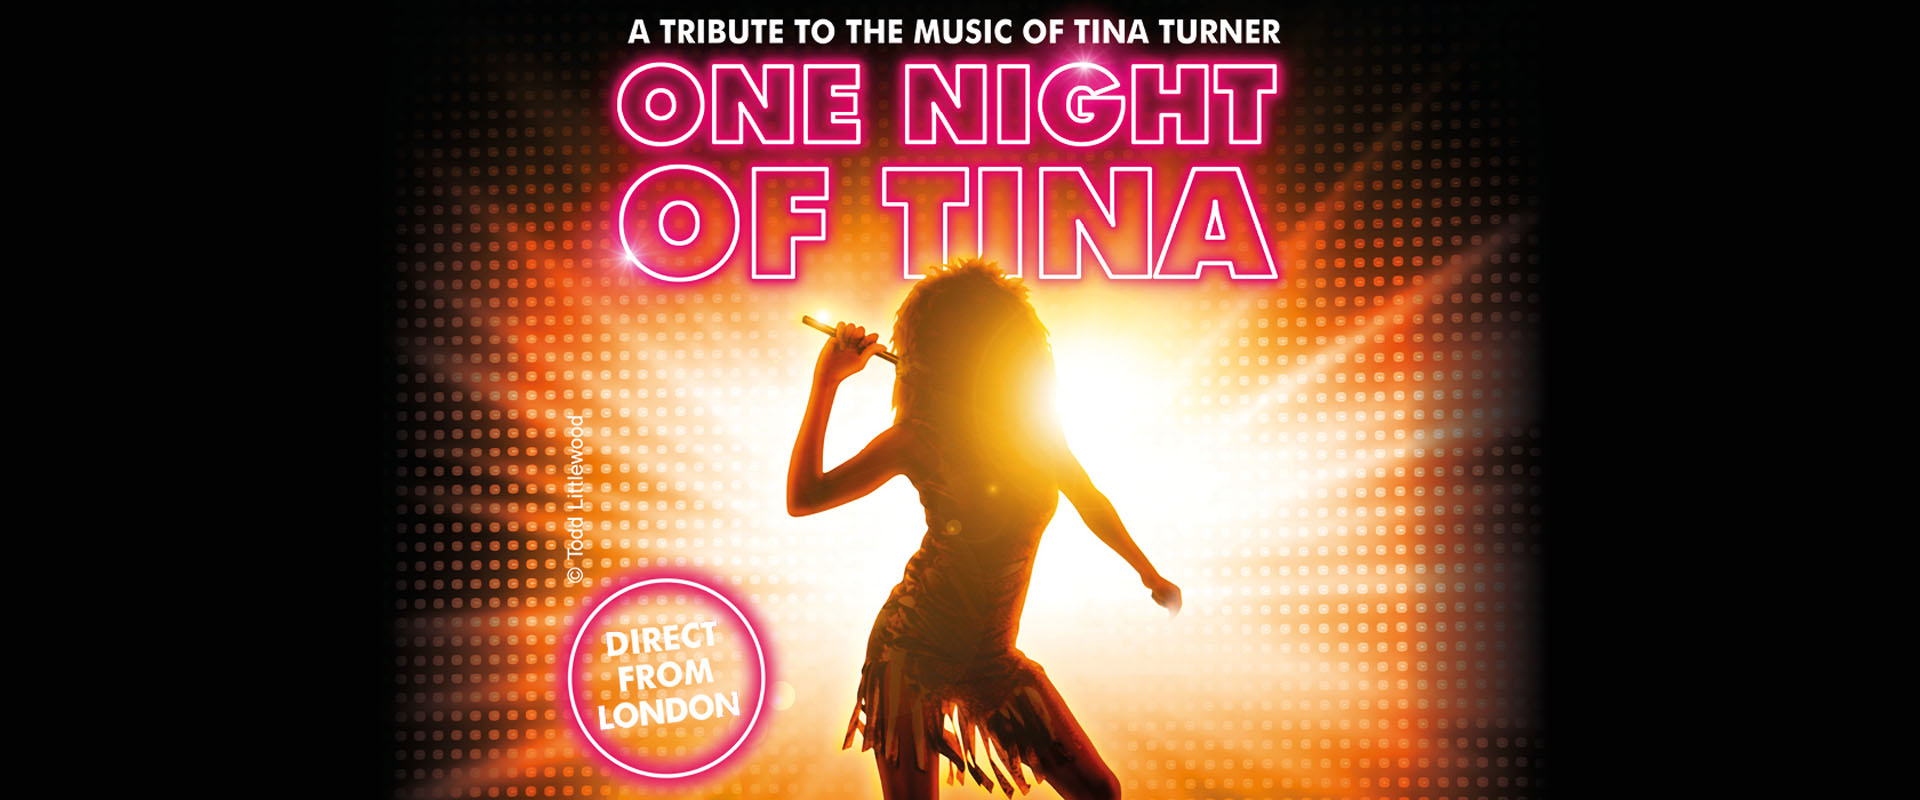 One night of Tina Turner